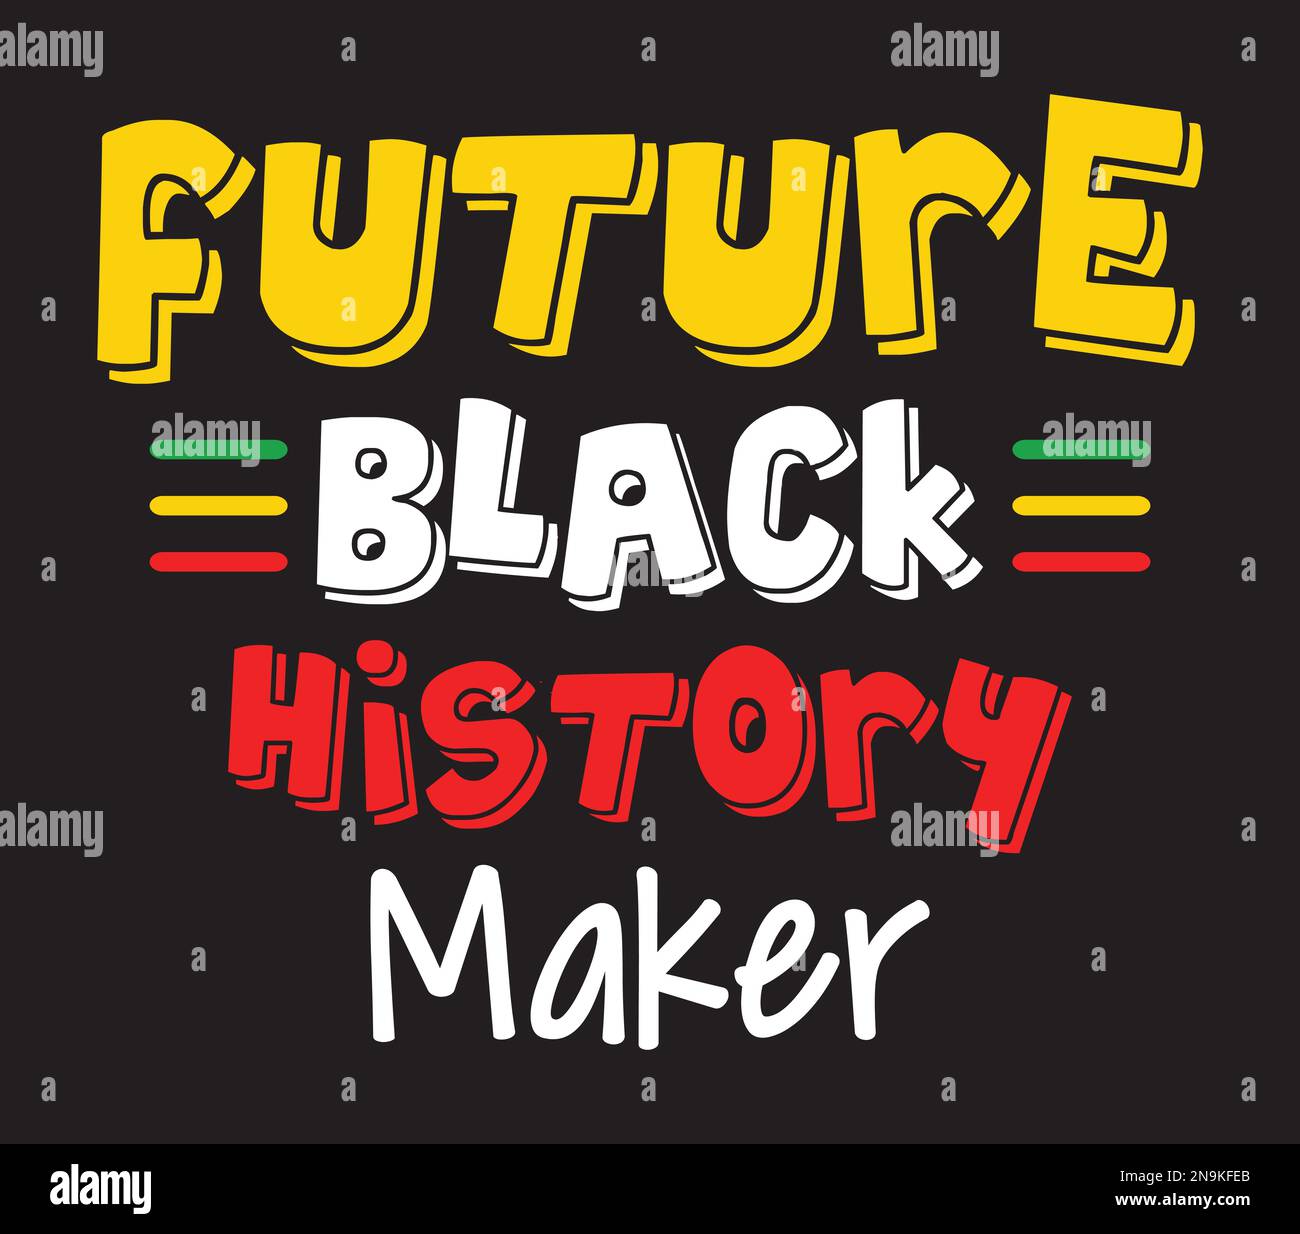 Future Black History Maker. Stock Vector